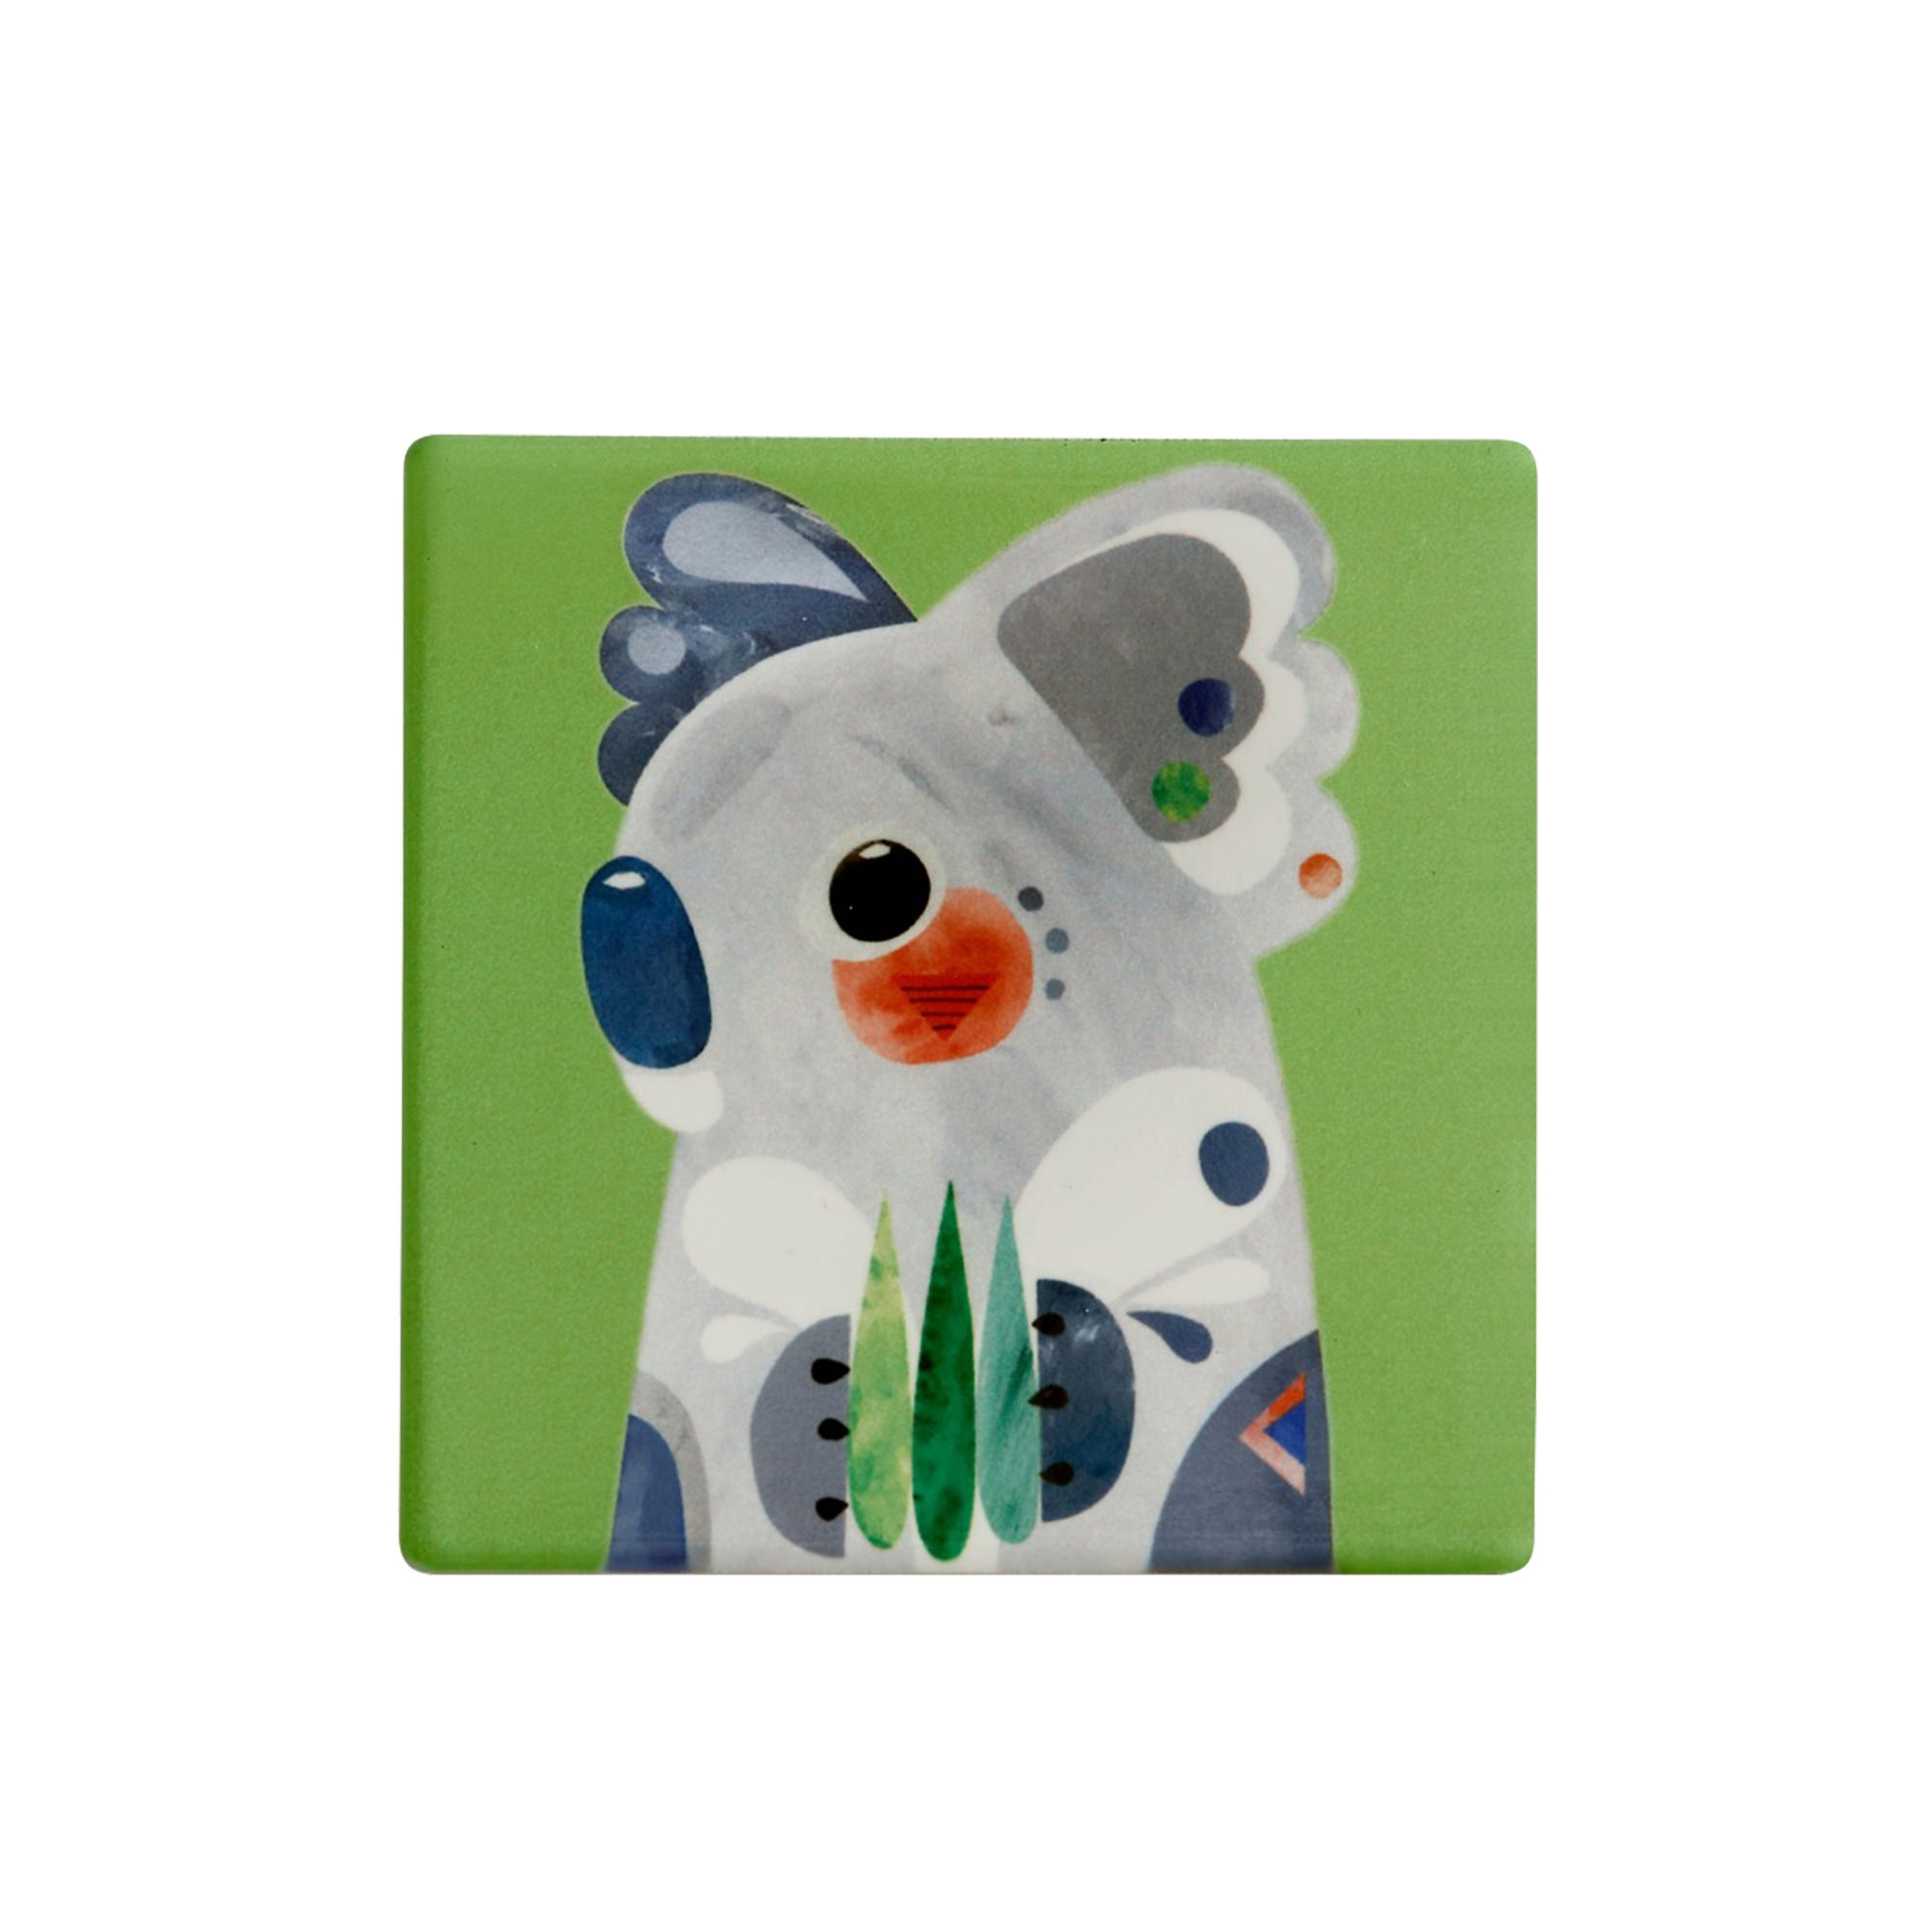 Maxwell Williams Pete Cromer Ceramic Square Tile Coaster Koala Image 1